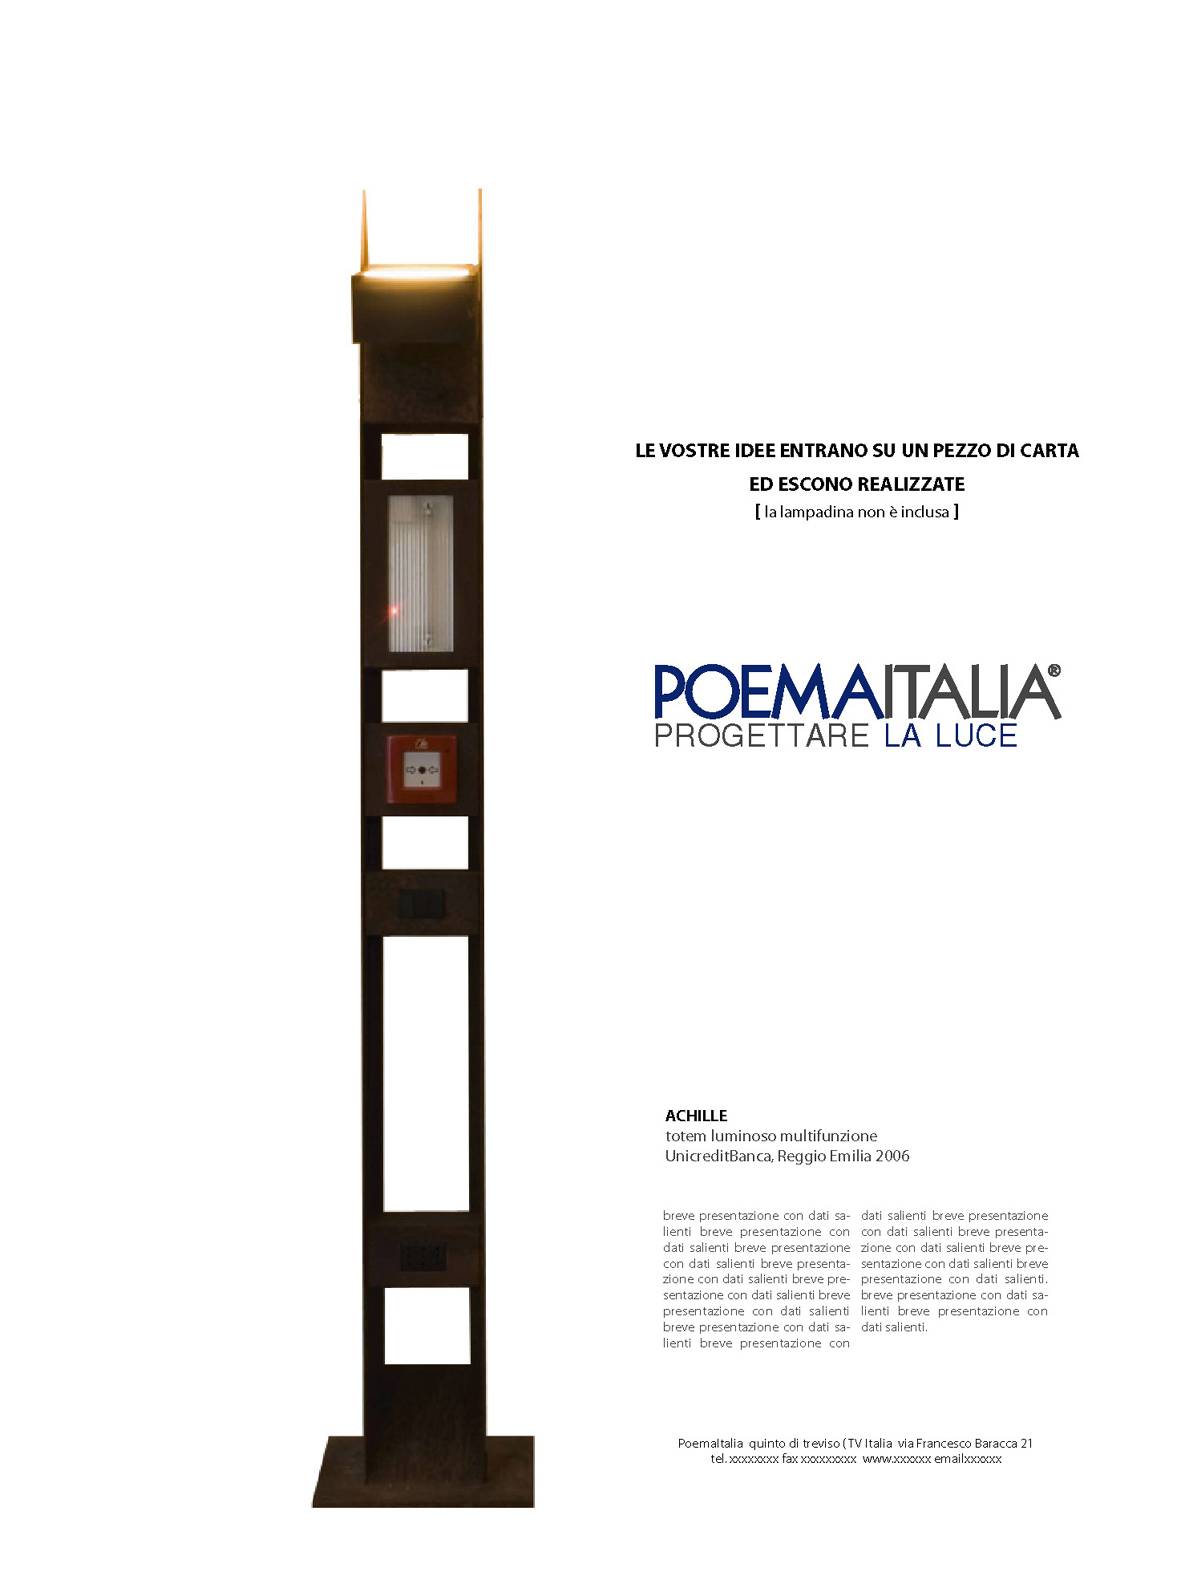 BVC, PoemaItalia illuminotecnica, advertising